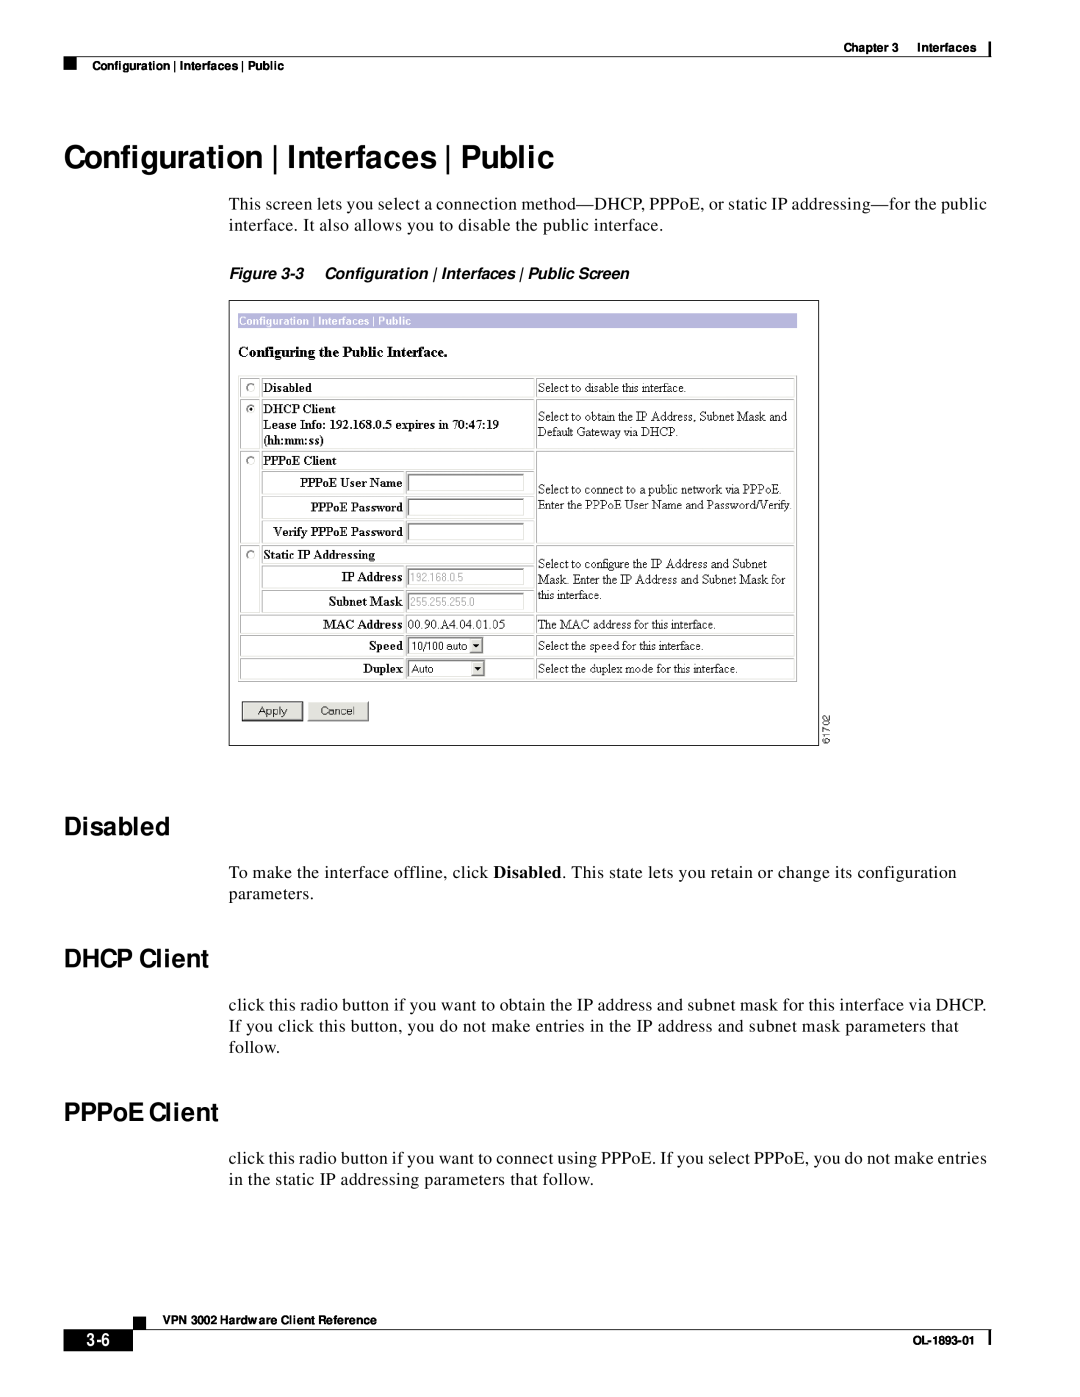 Cisco Systems VPN 3002 manual Configuration | Interfaces | Public, DHCP Client, PPPoE Client, Disabled 